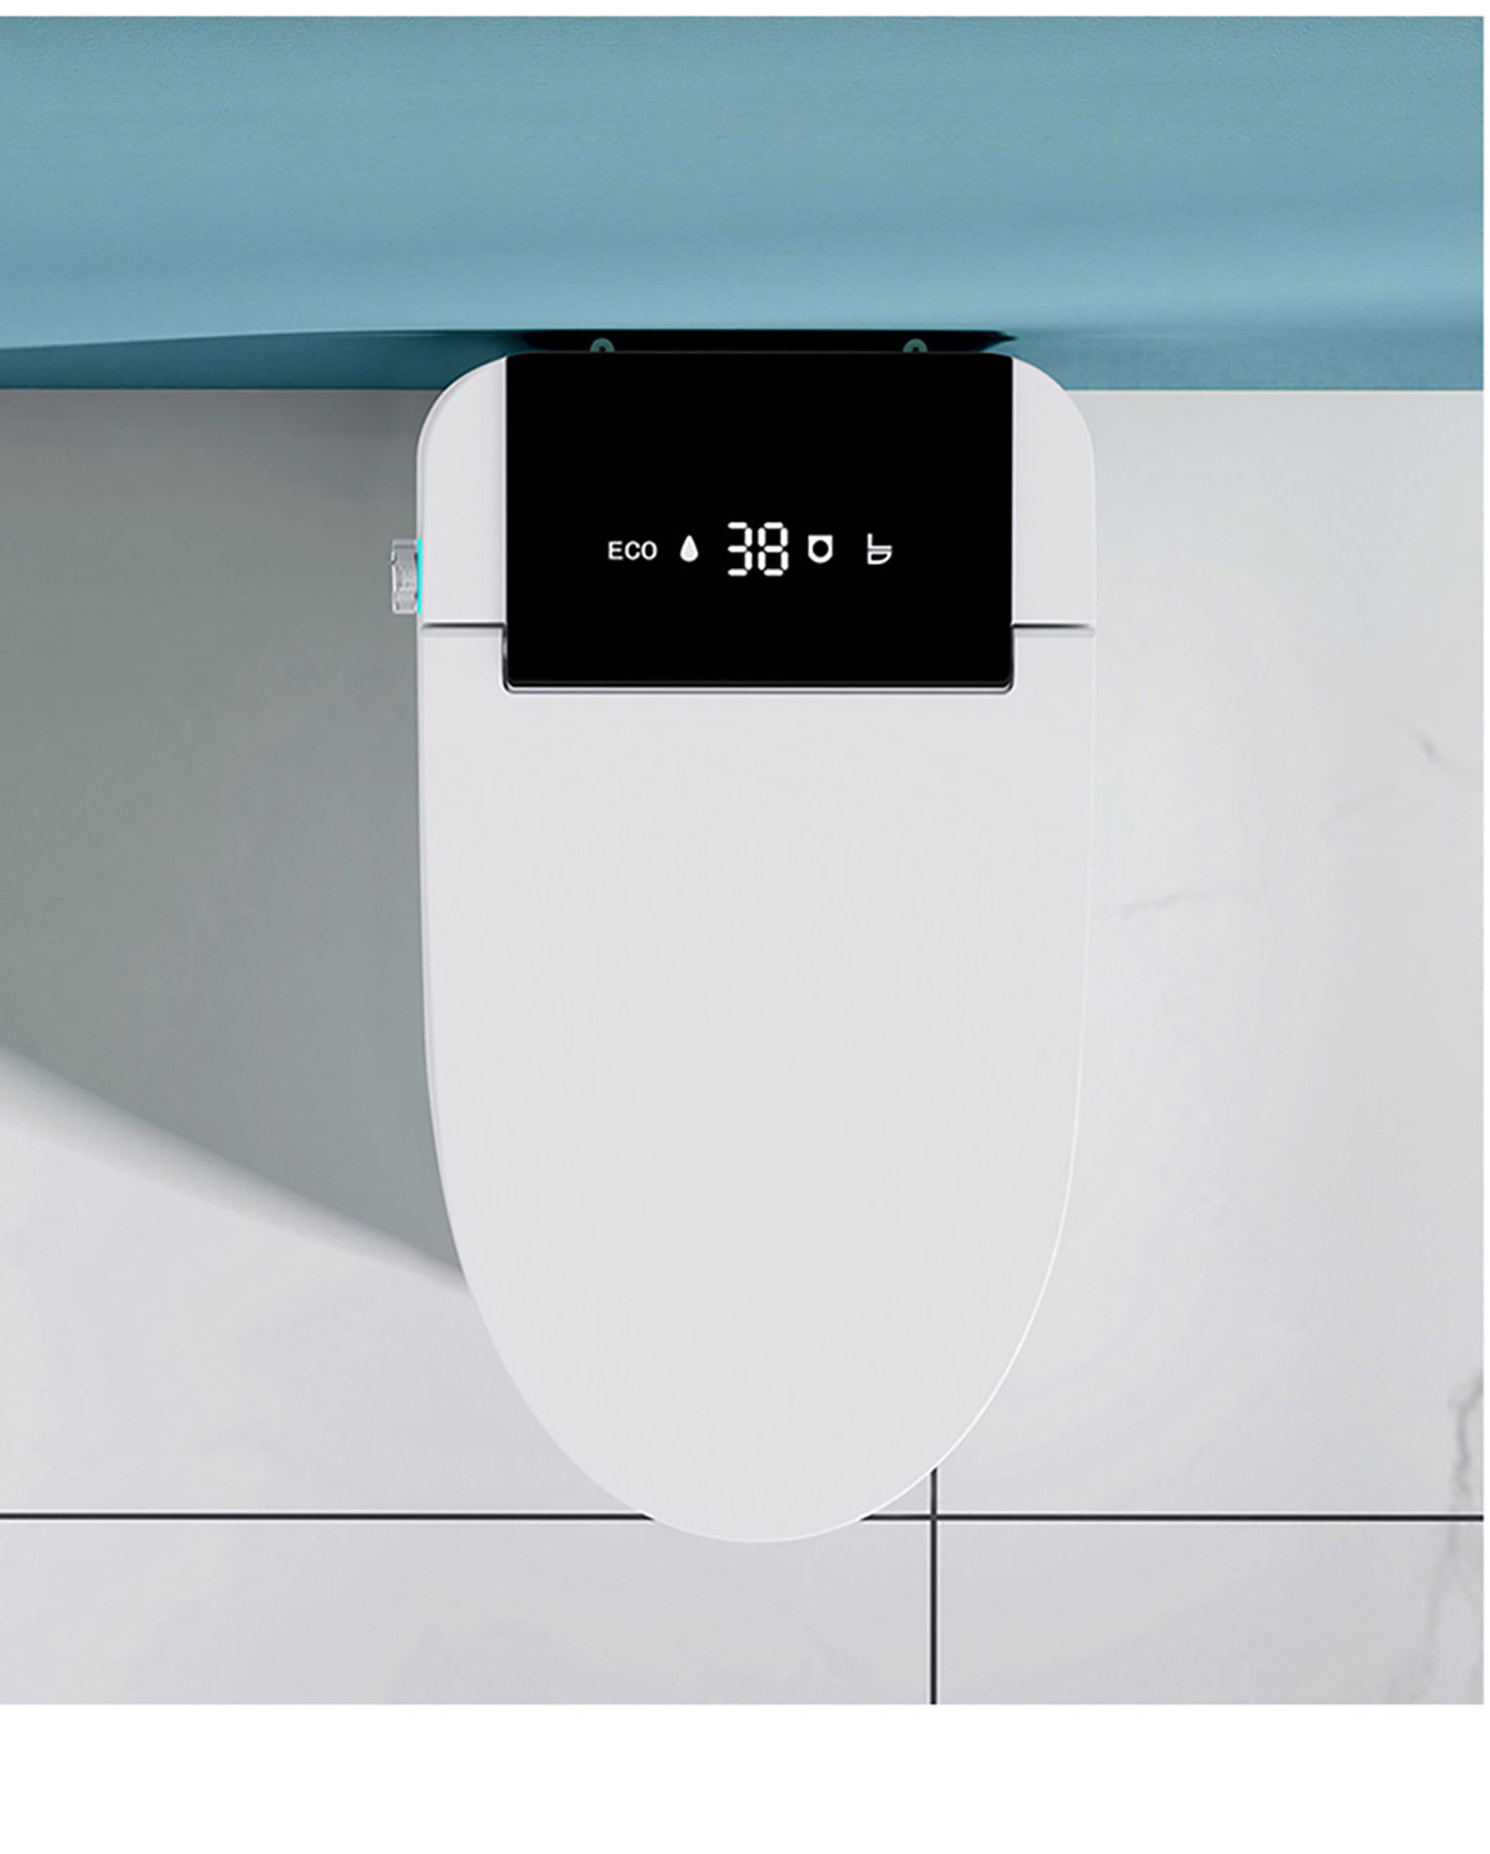 Best intelligent toilet electrique nightlight foot sensor flushing bathroom bowl ceramic toilet smart (23)